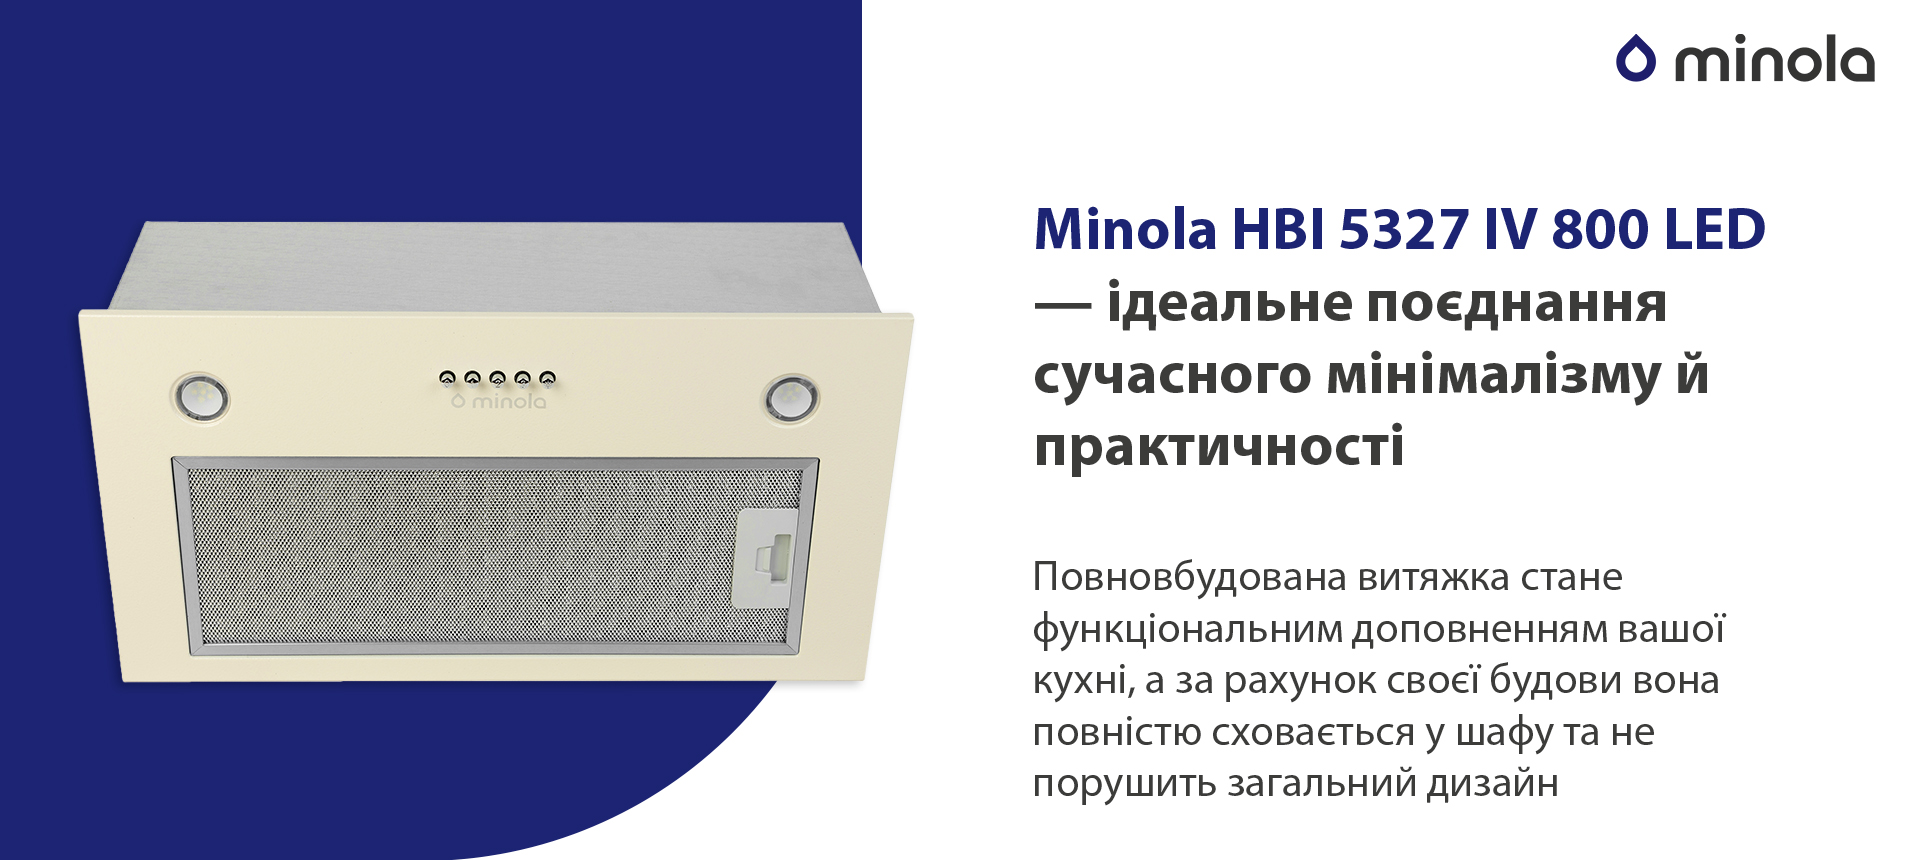 Minola HBI 5327 IV 800 LED в магазине в Киеве - фото 10